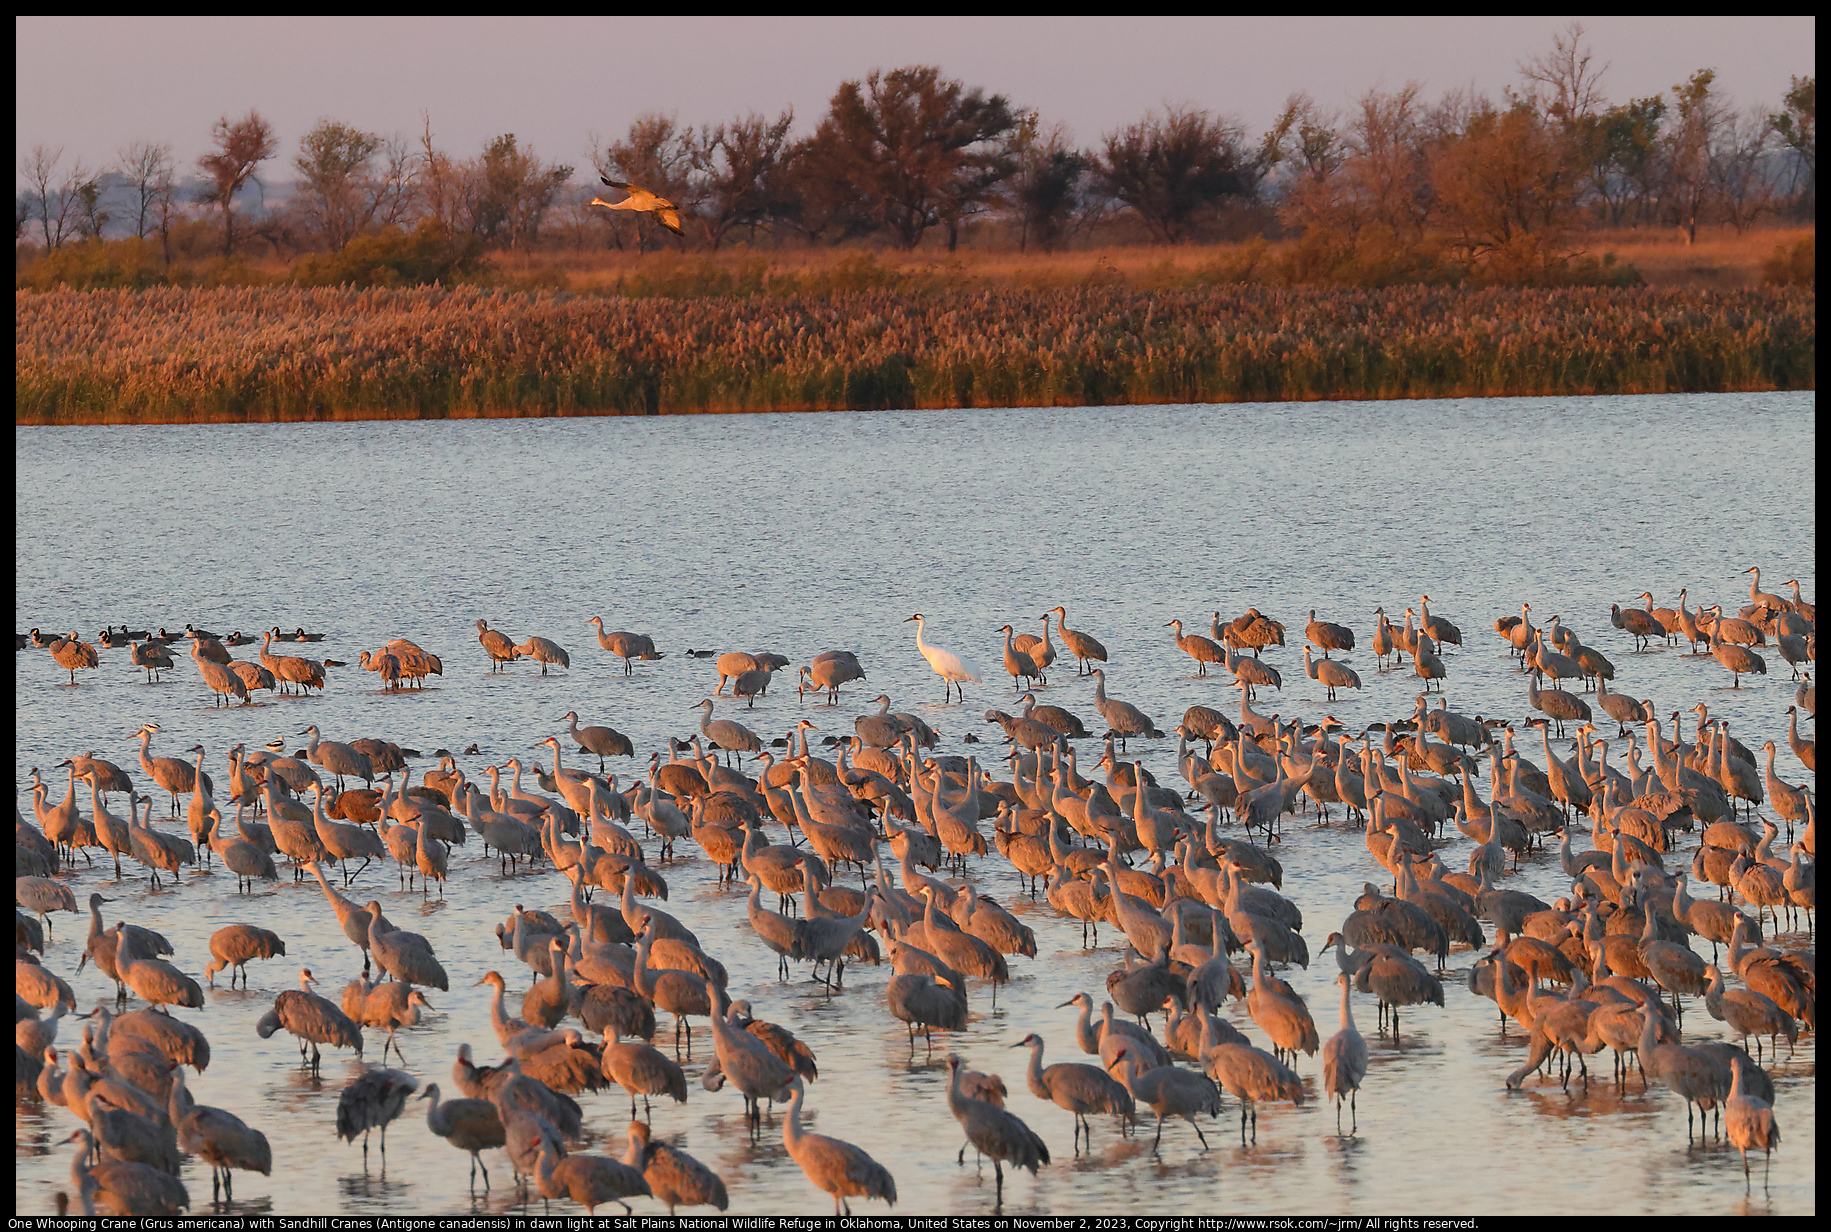 One Whooping Crane (Grus americana) with Sandhill Cranes (Antigone canadensis) at Salt Plains National Wildlife Refuge in Oklahoma, United States on November 2, 2023